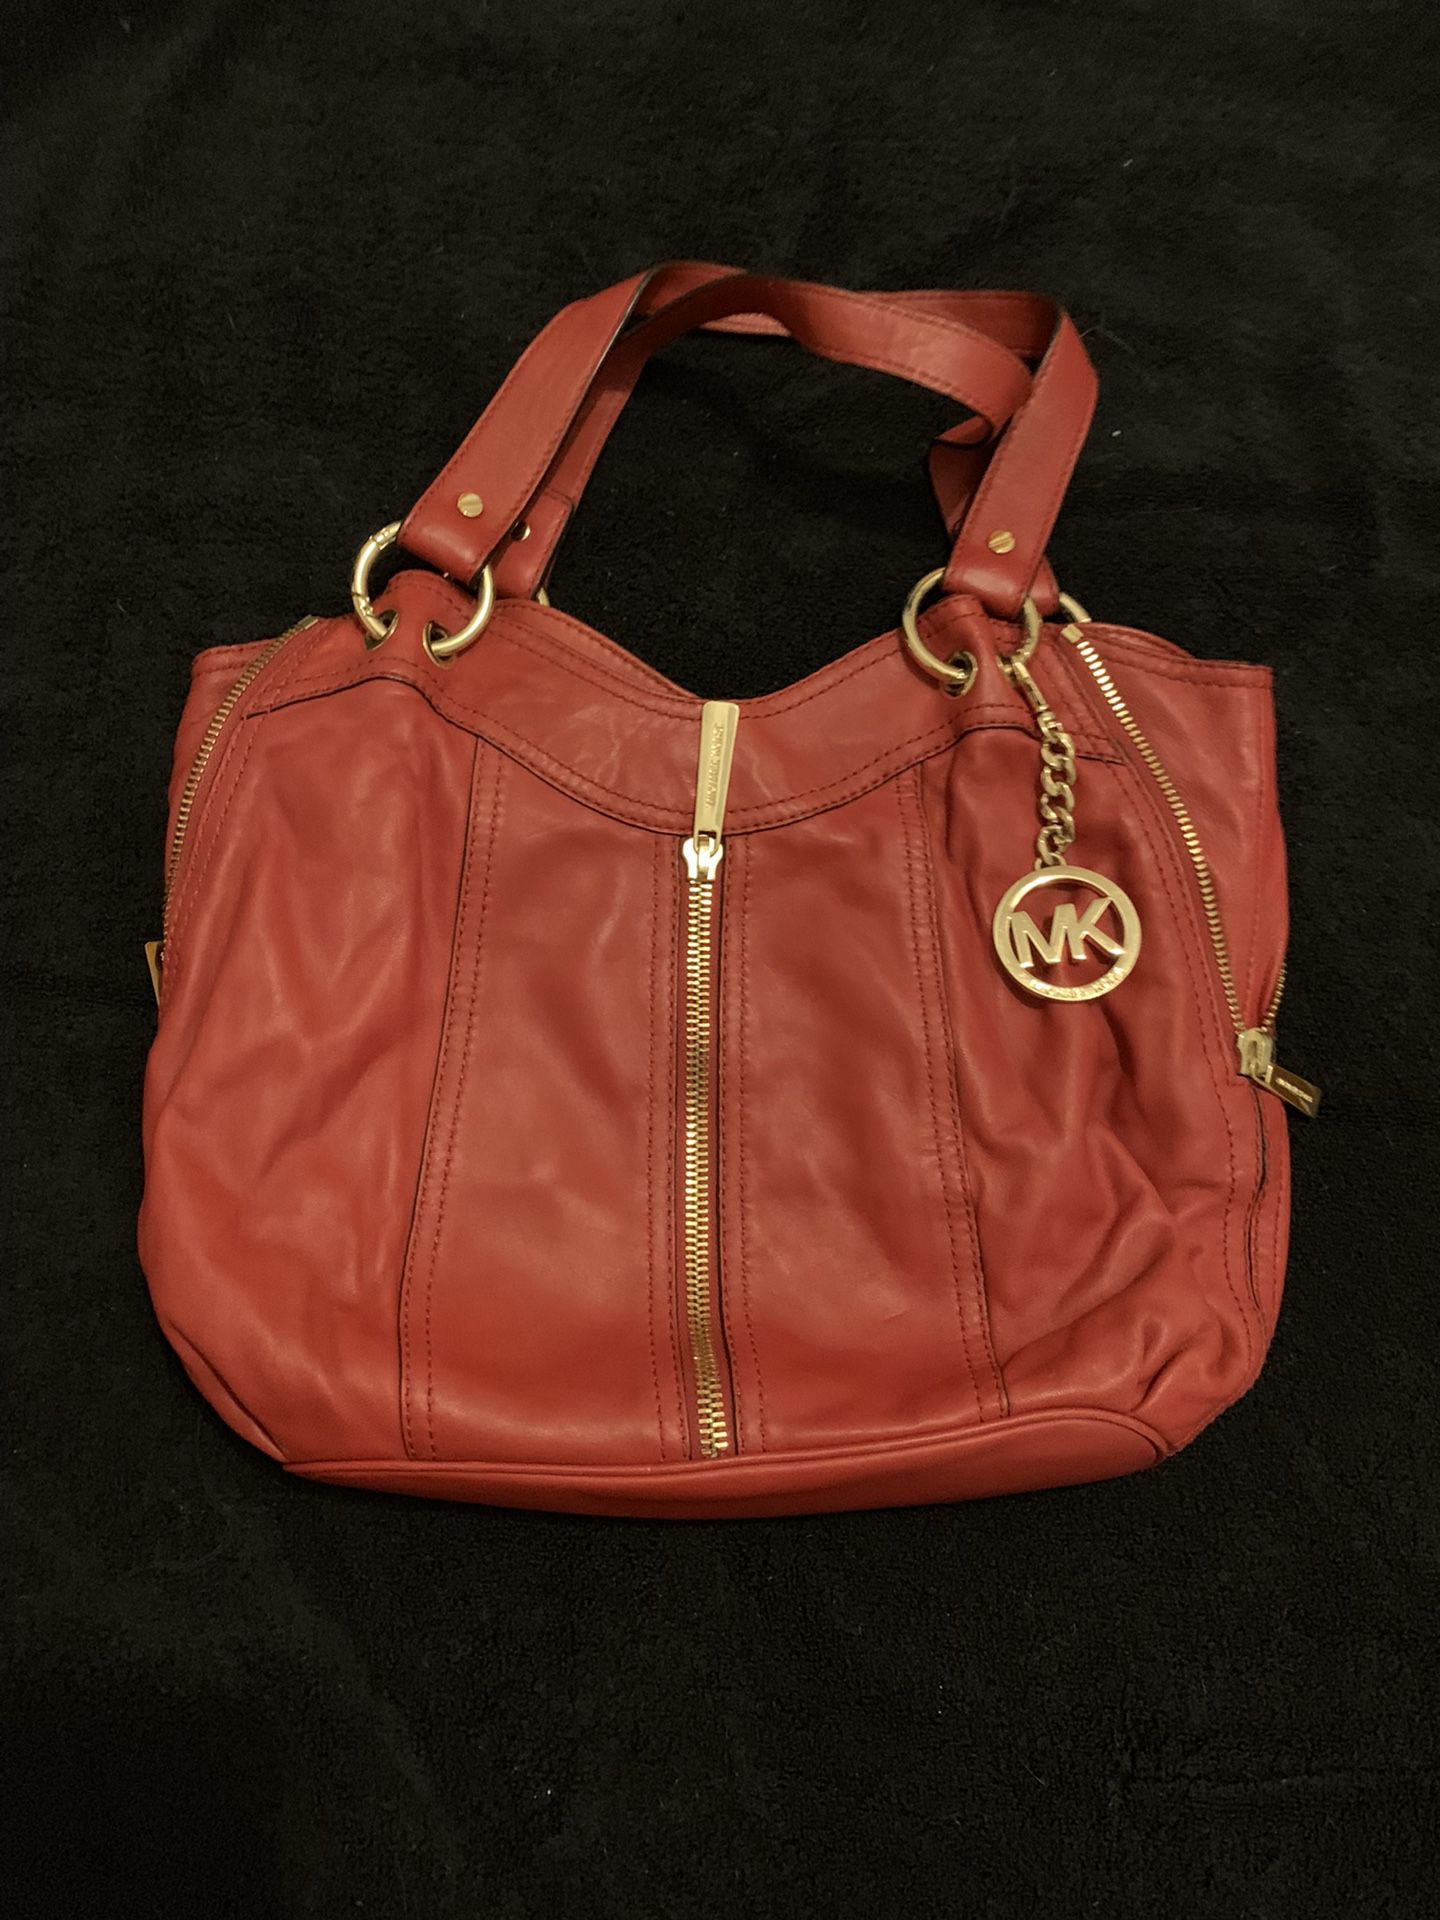 Michael Kors red patent leather handbag